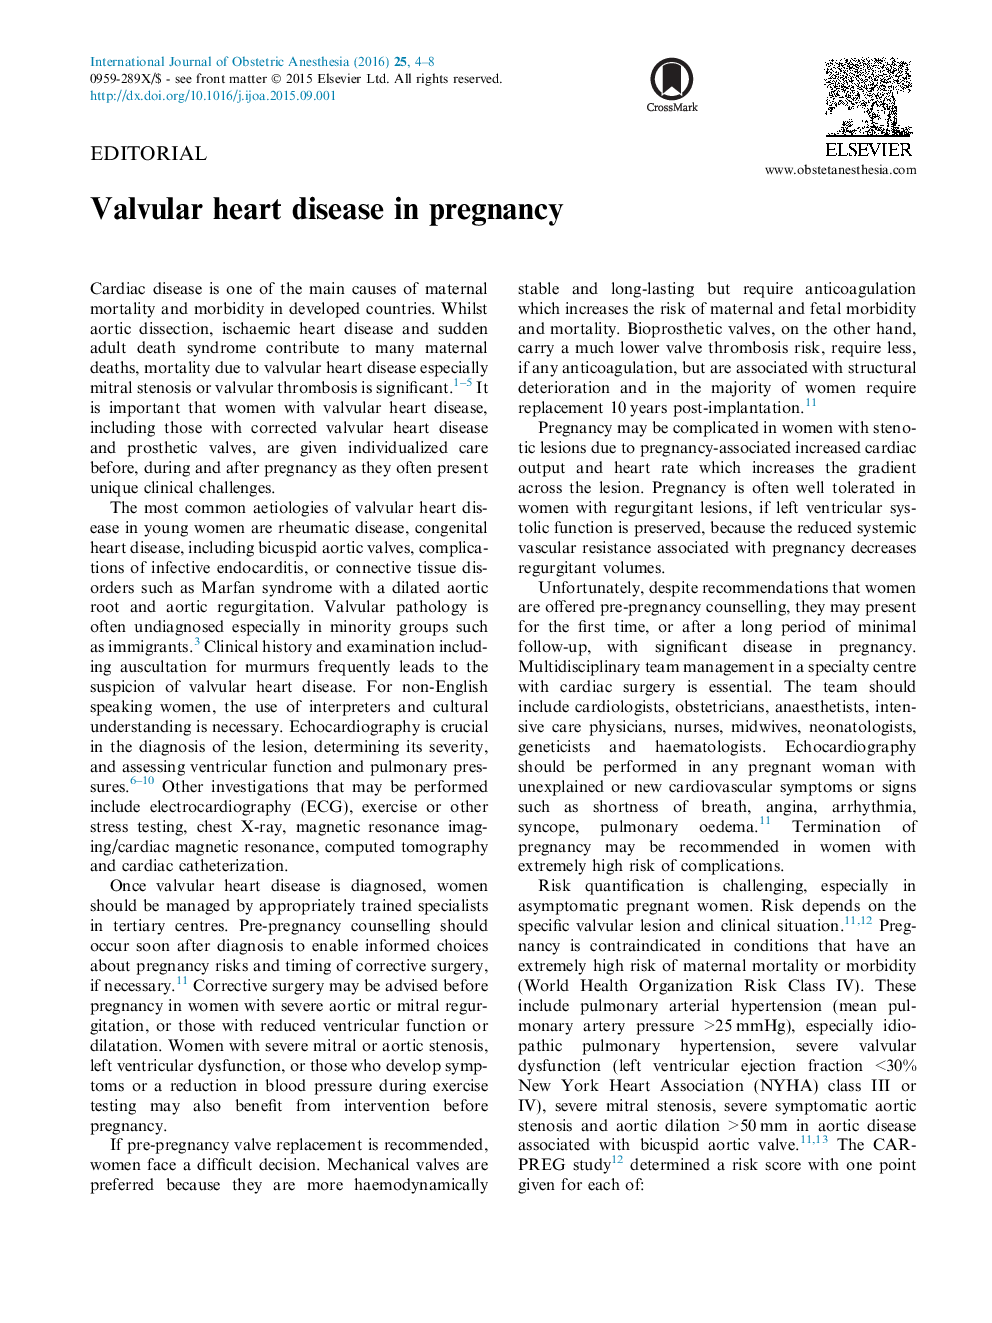 Valvular heart disease in pregnancy